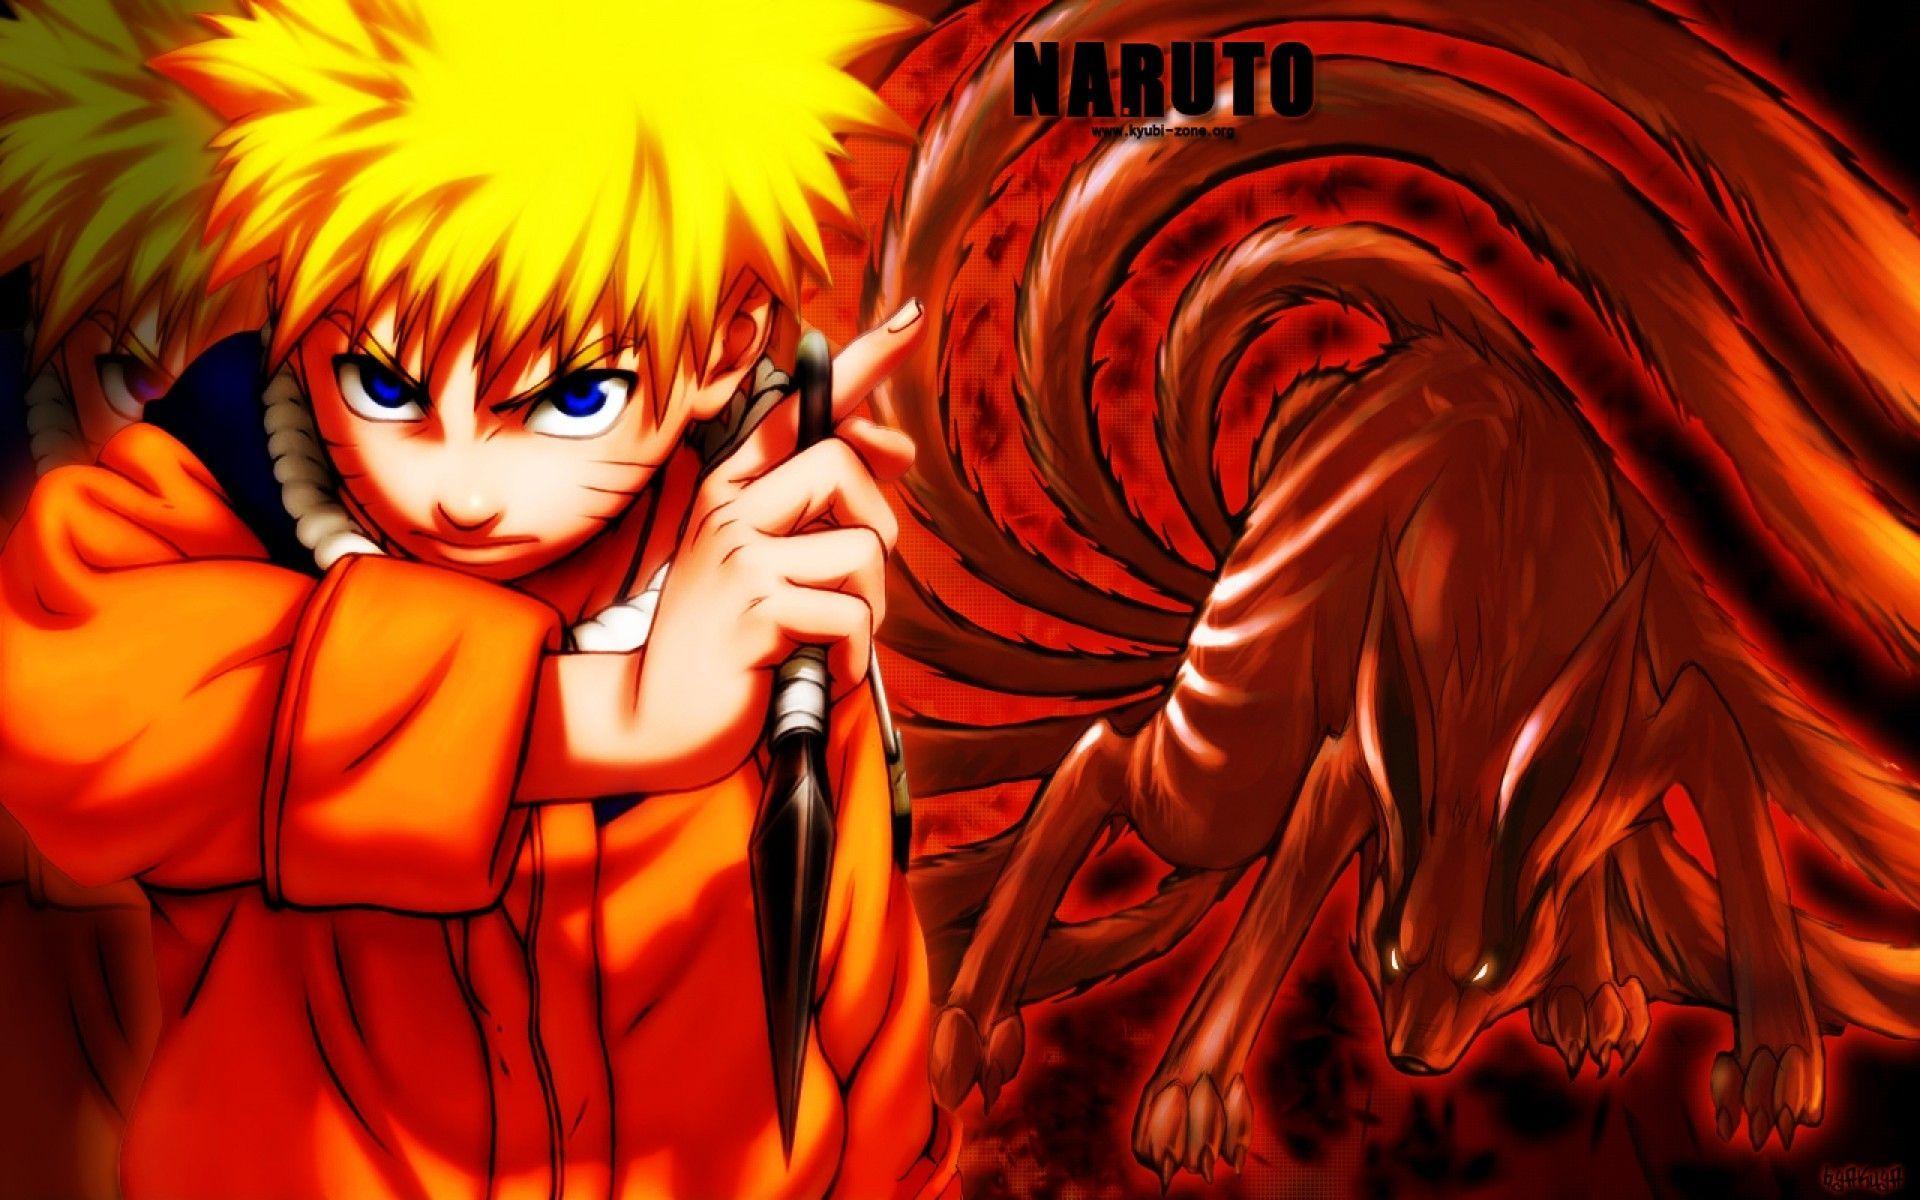 Naruto 9 Tailed Fox Wallpaper Awesome Naruto Nine Tails Wallpaper ·â